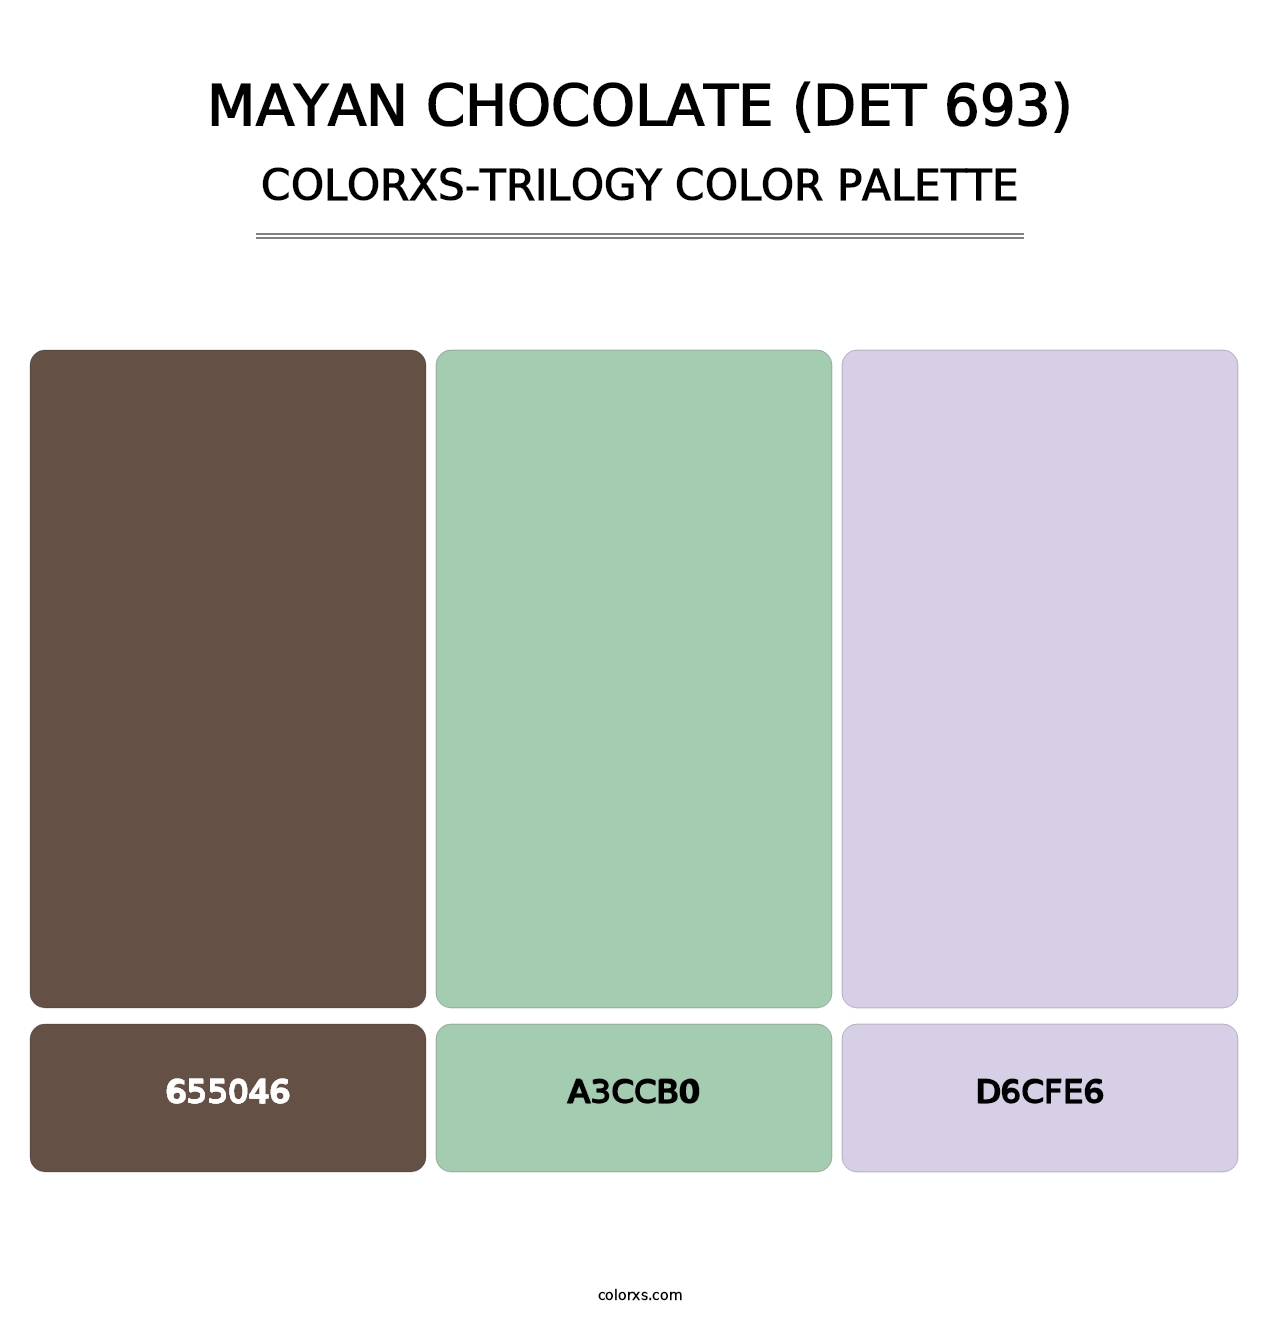 Mayan Chocolate (DET 693) - Colorxs Trilogy Palette